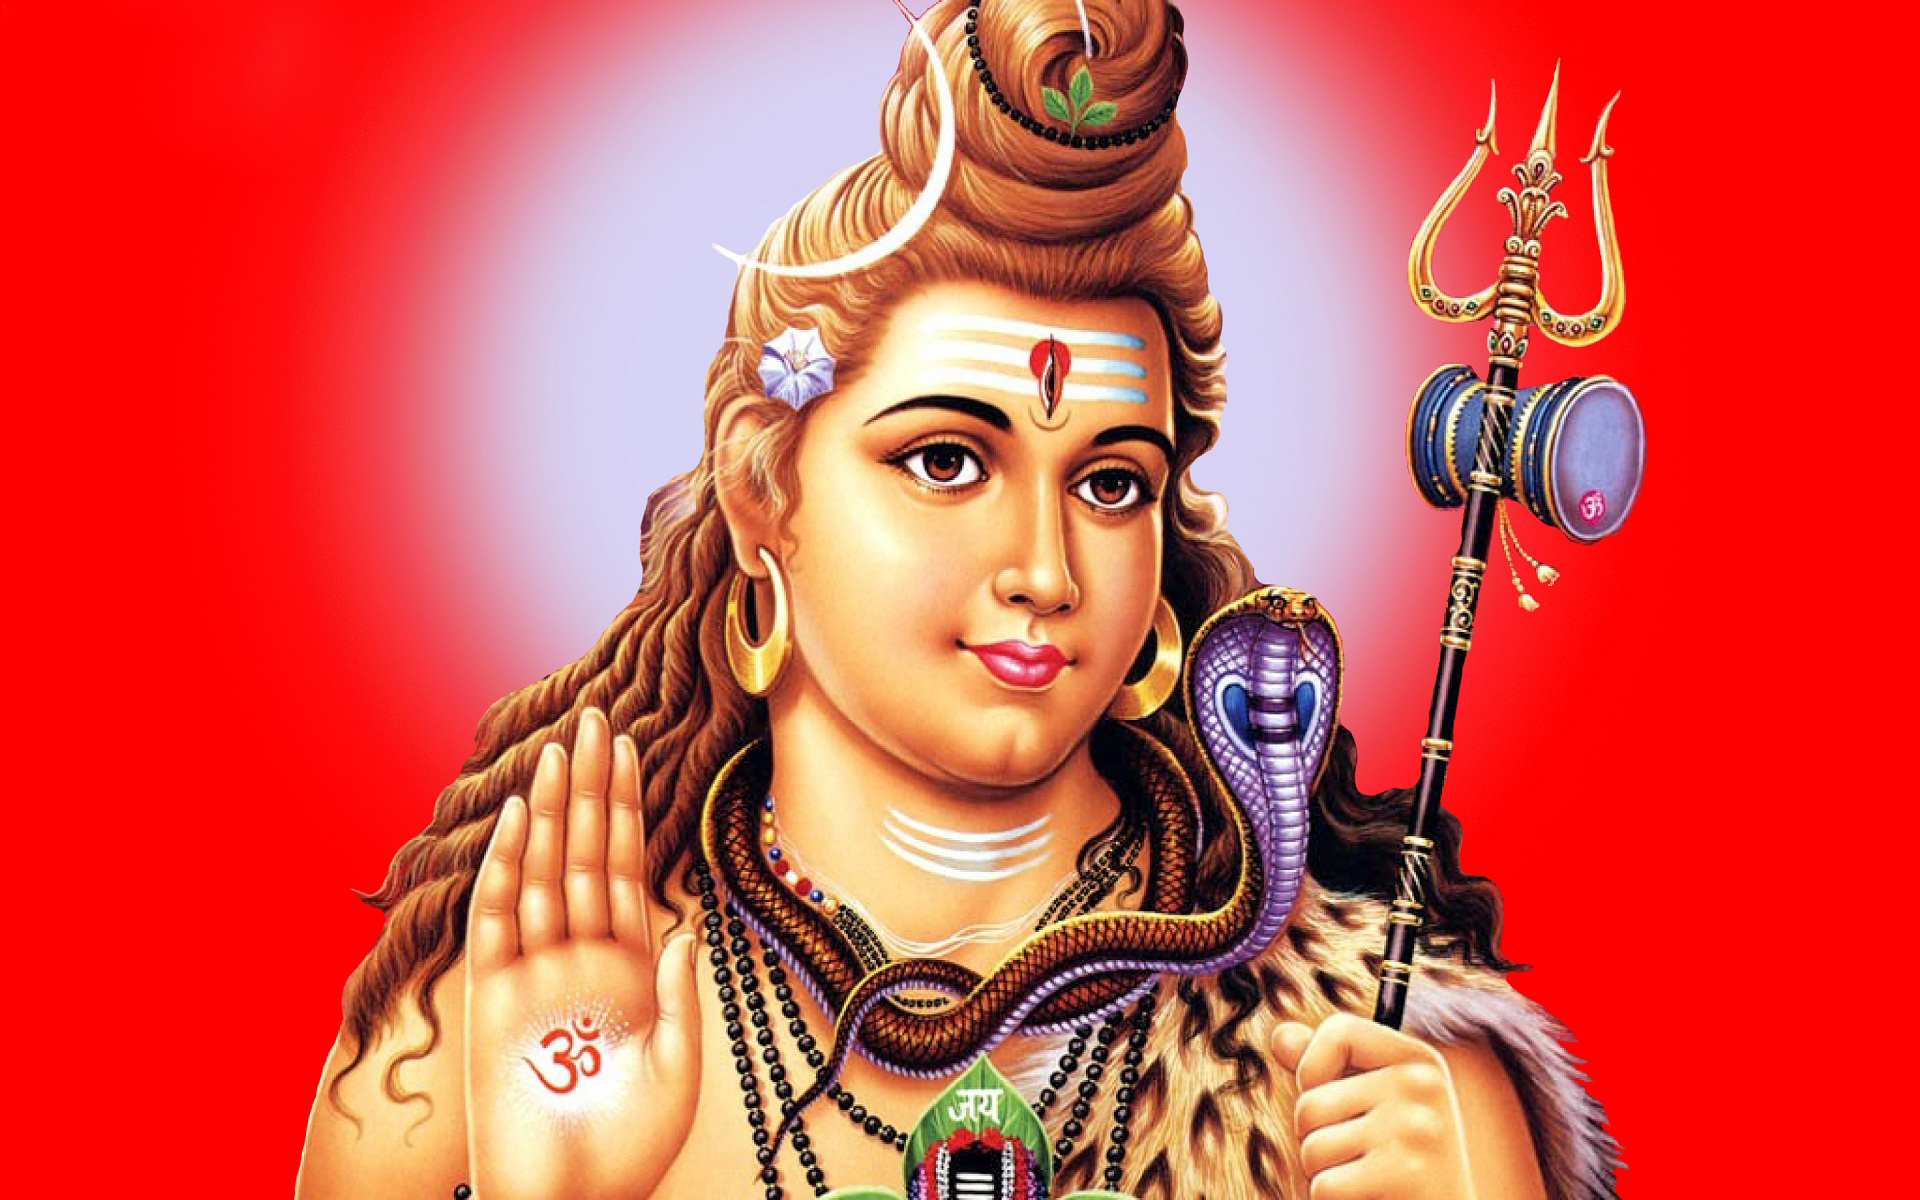 Lord Shiva HD Wallpapers - WallpaperSafari